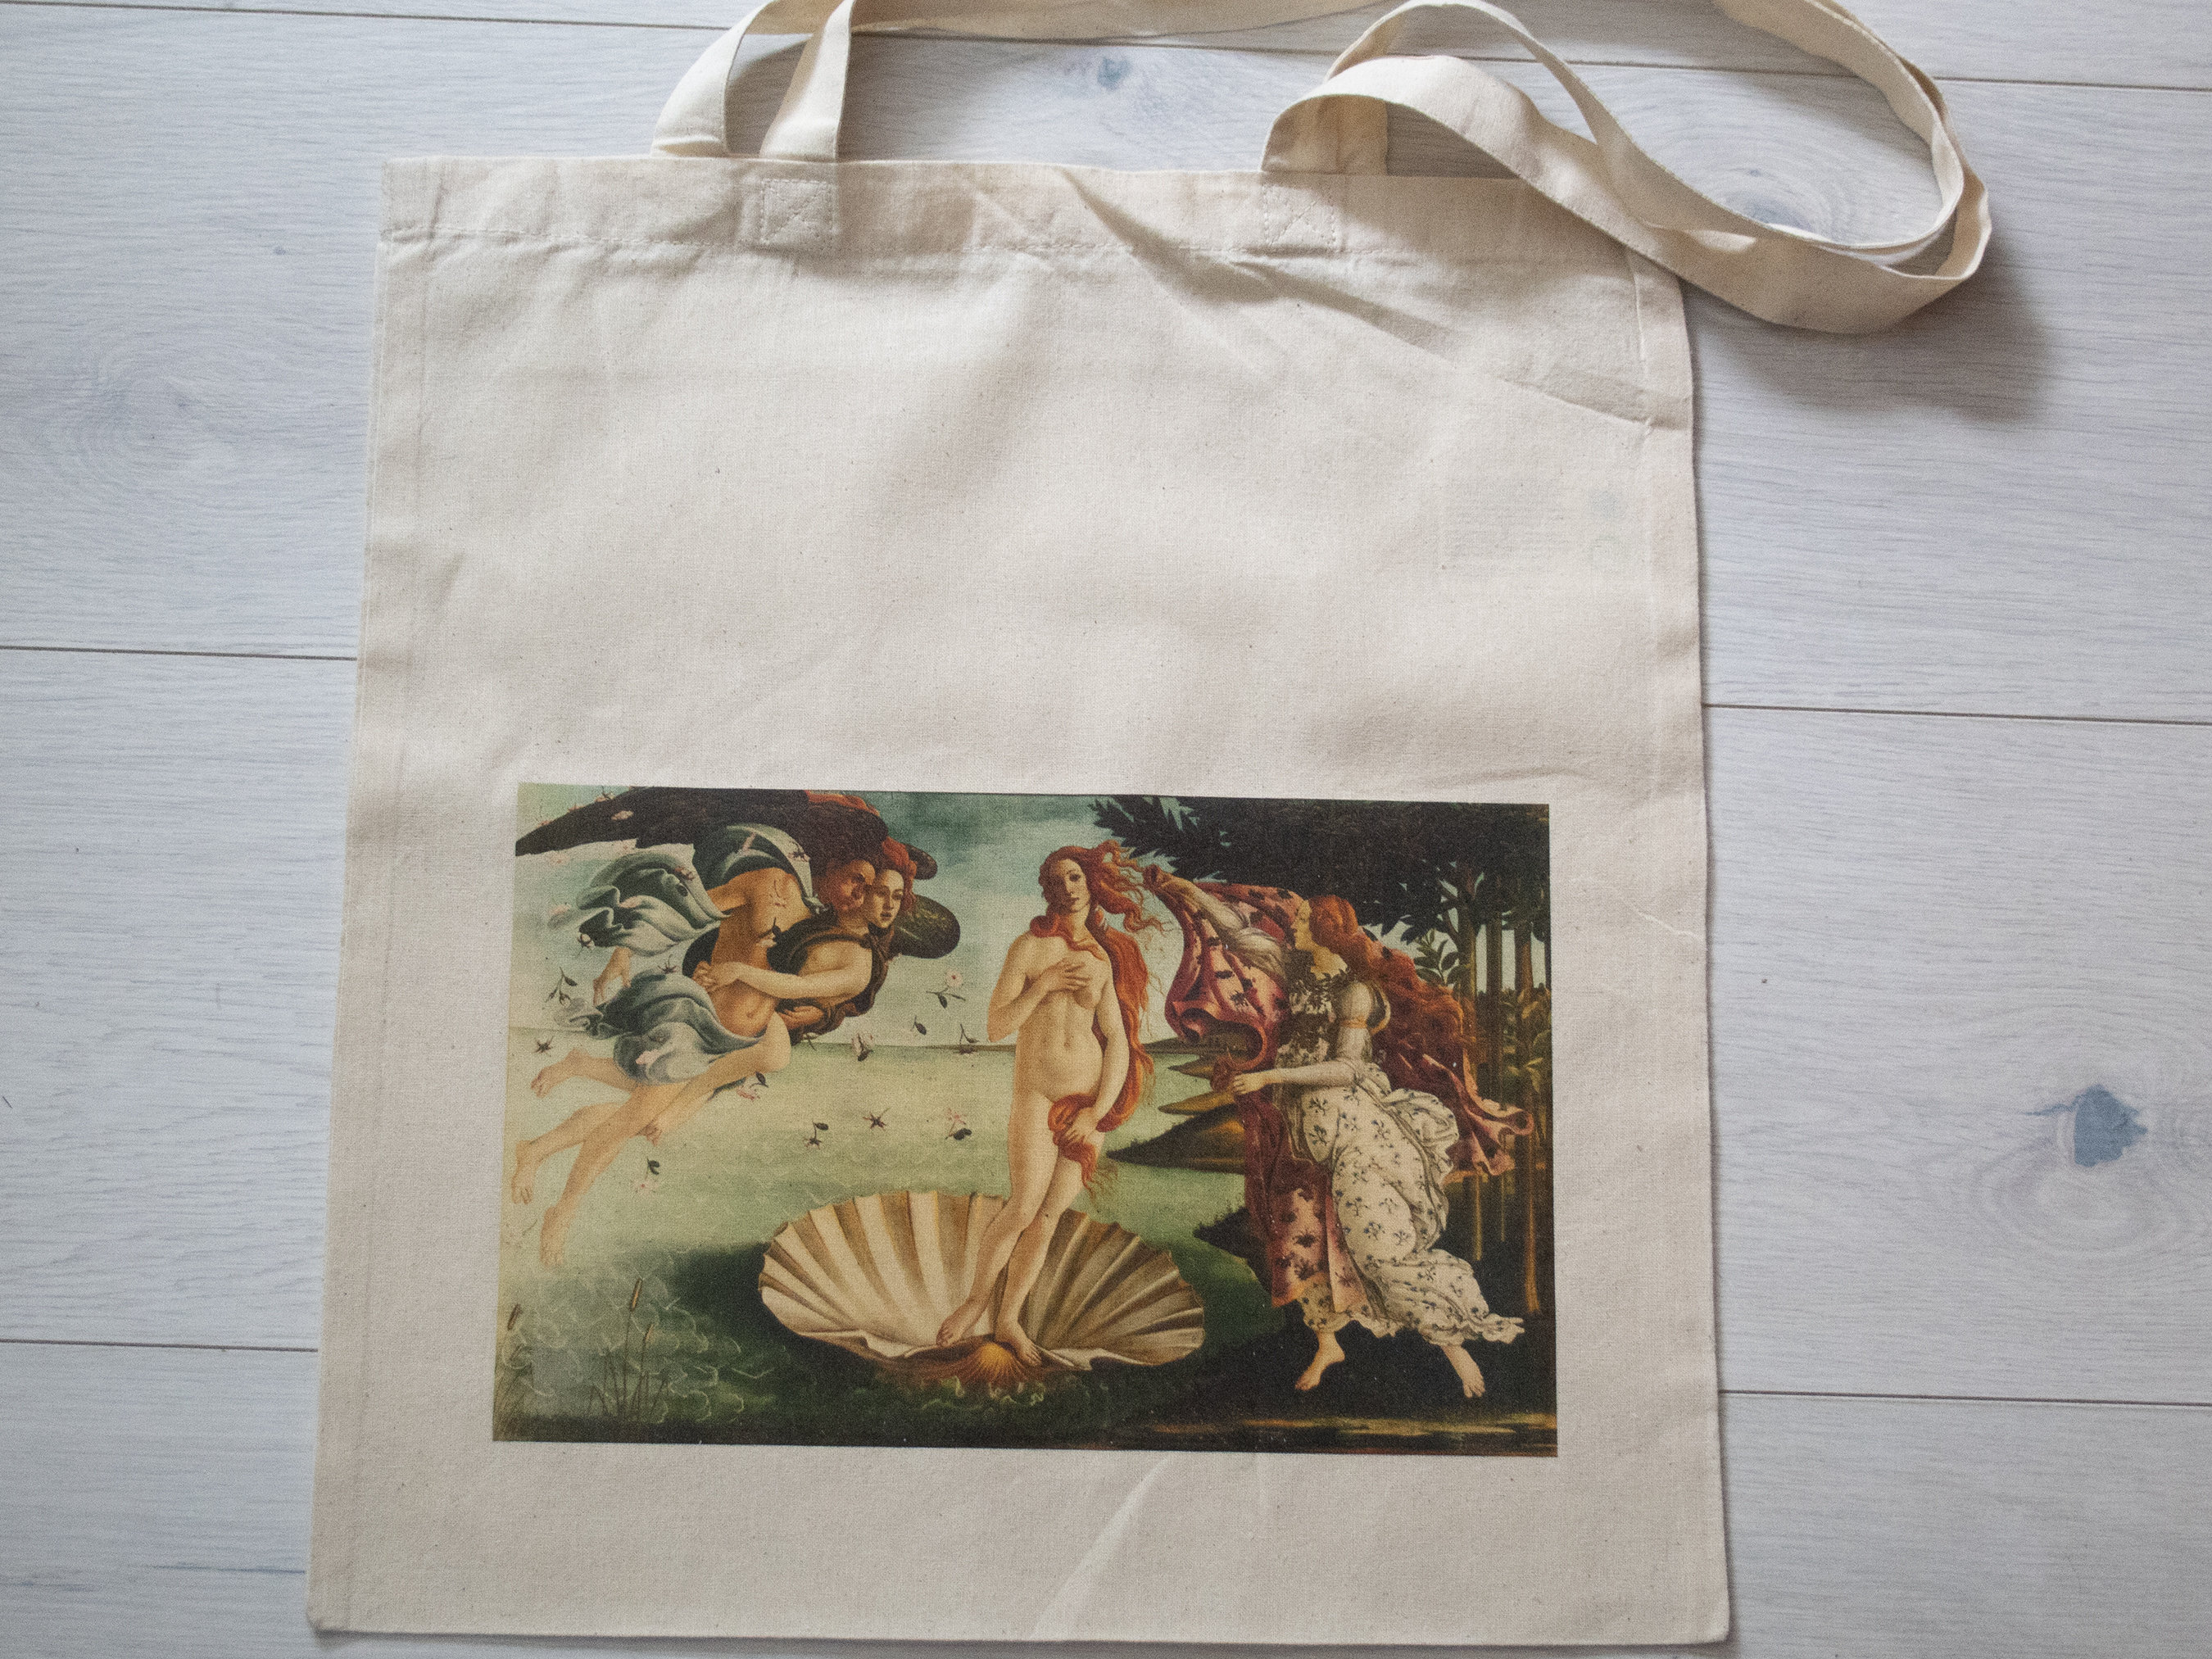 Renaissance Art Tote Bag Botticelli Tote the Birth of Venus 